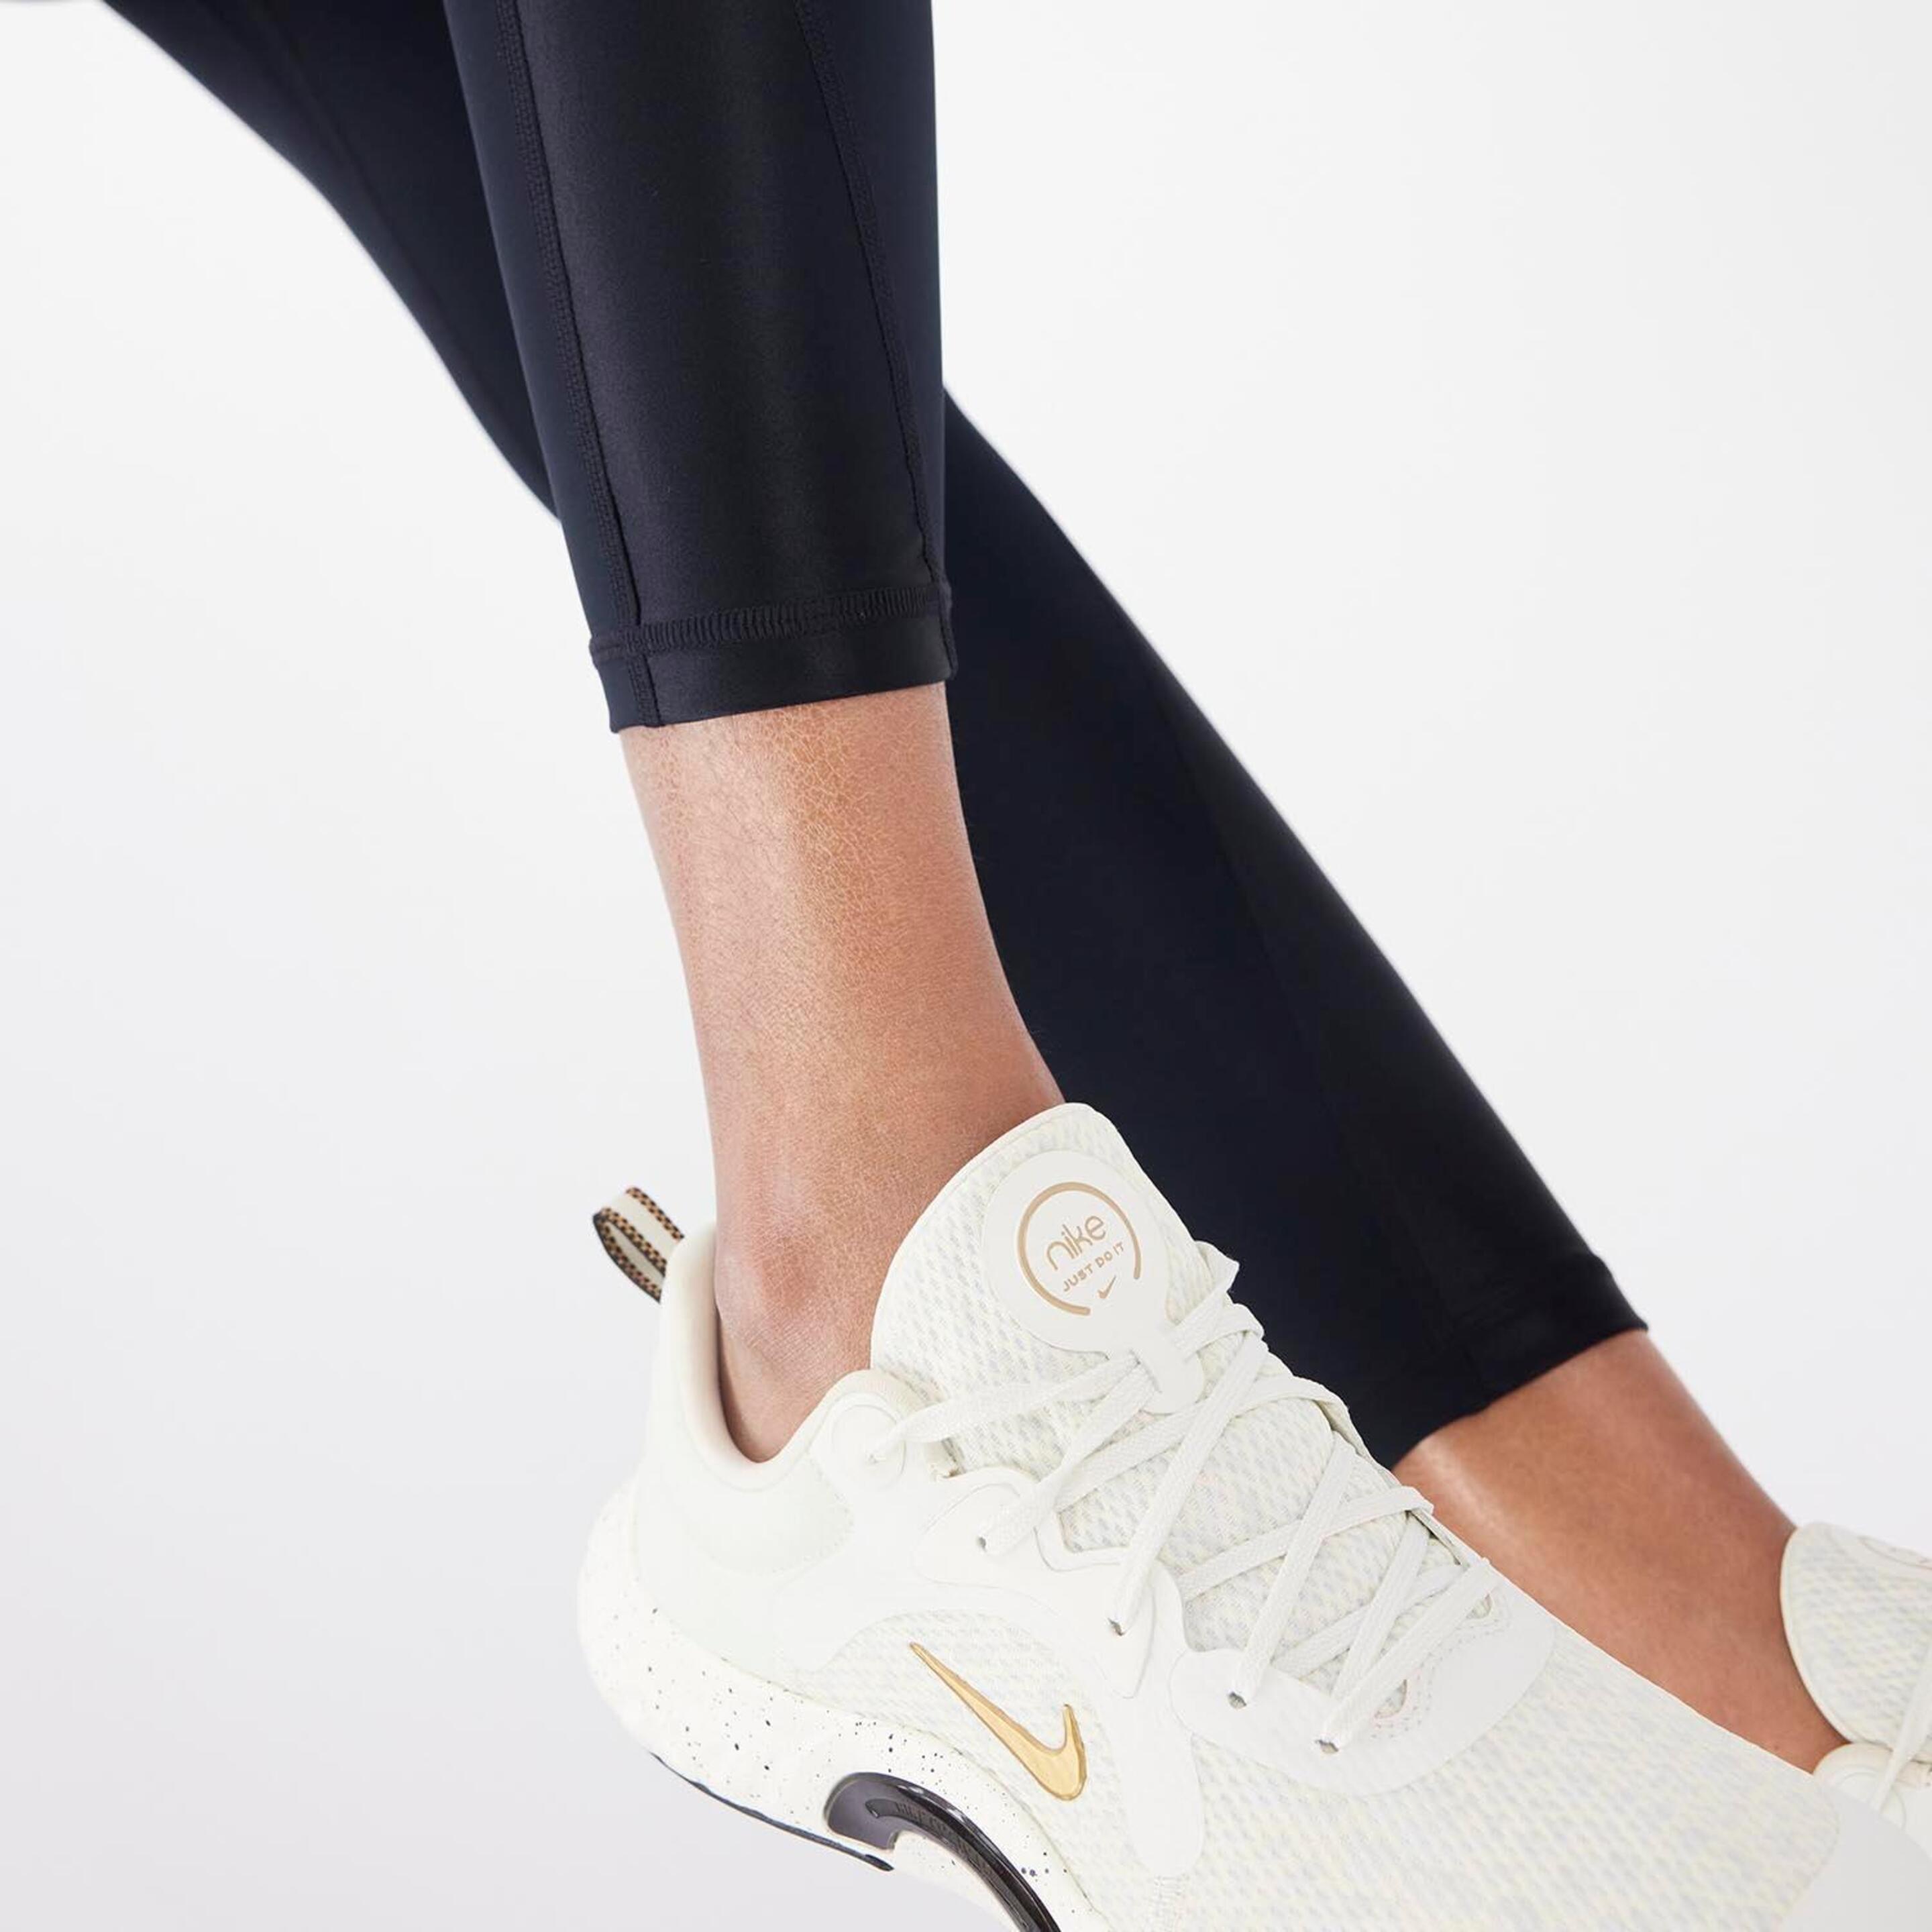 Nike Tight - Negro - Mallas Mujer